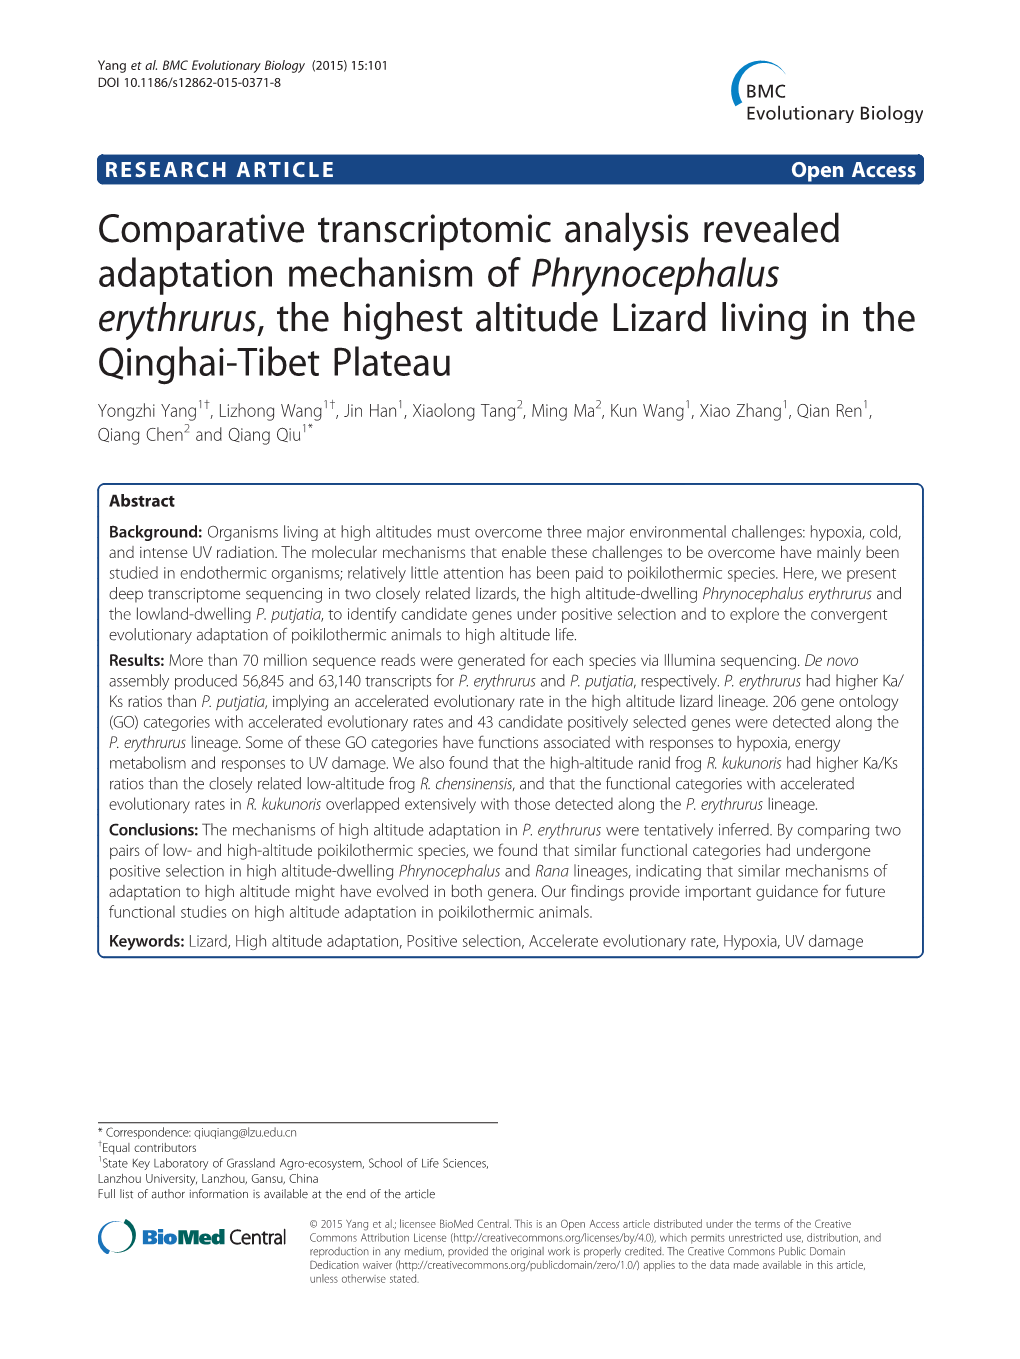 Comparative Transcriptomic Analysis Revealed Adaptation Mechanism Of